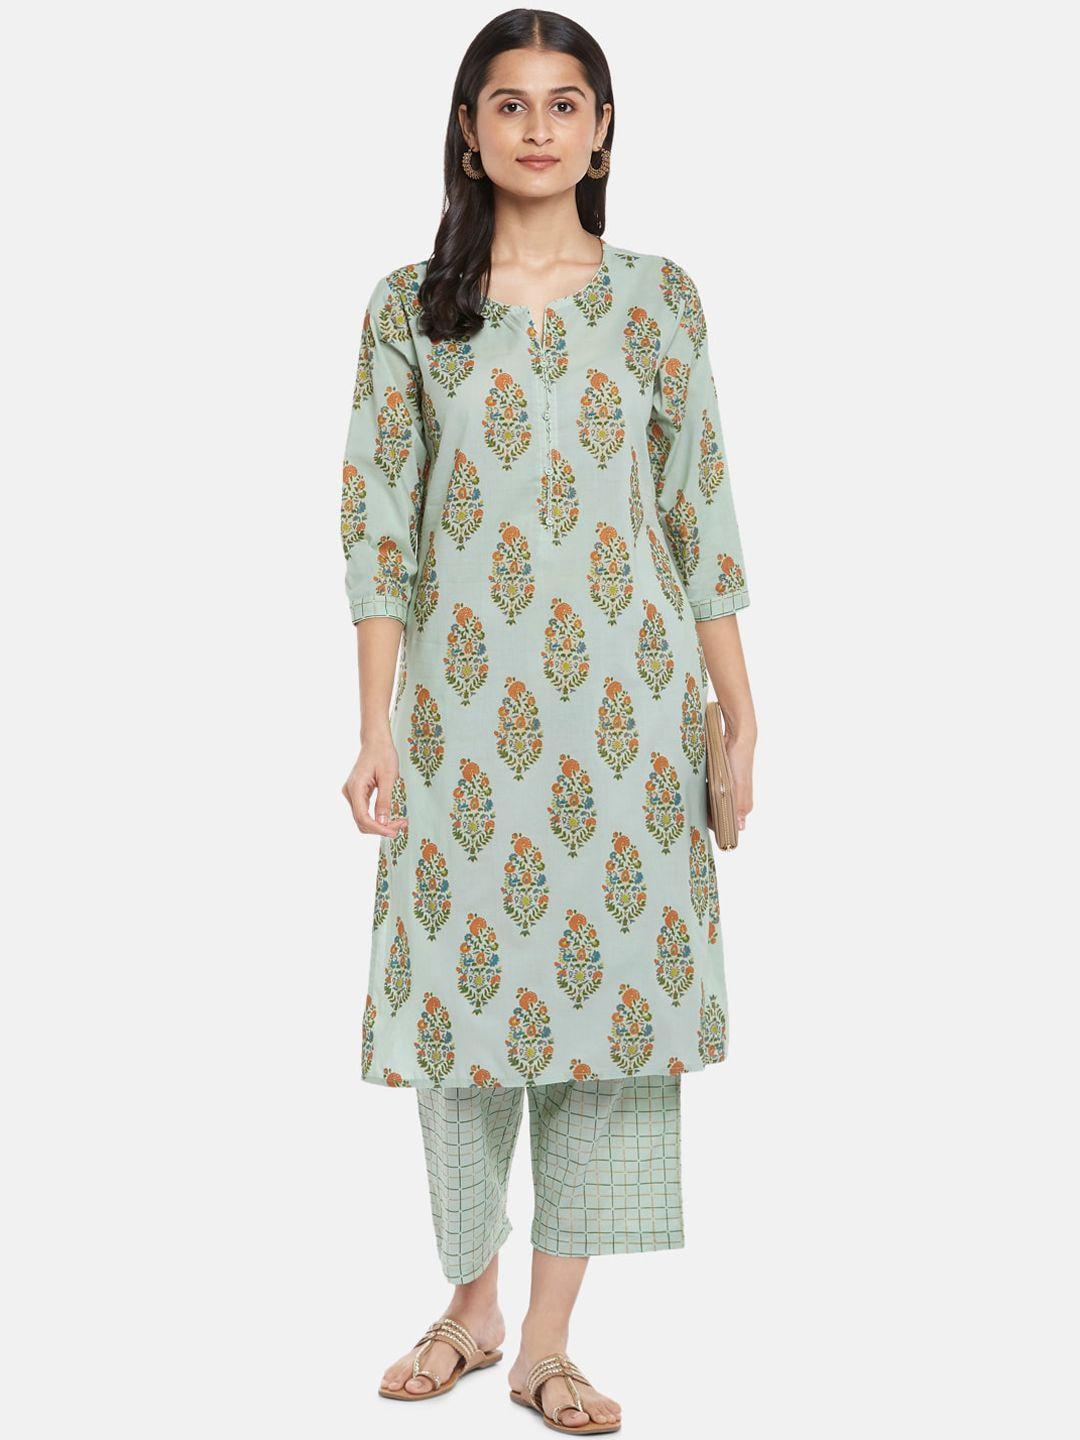 rangmanch by pantaloons women sea green ethnic motifs printed pure cotton kurta set